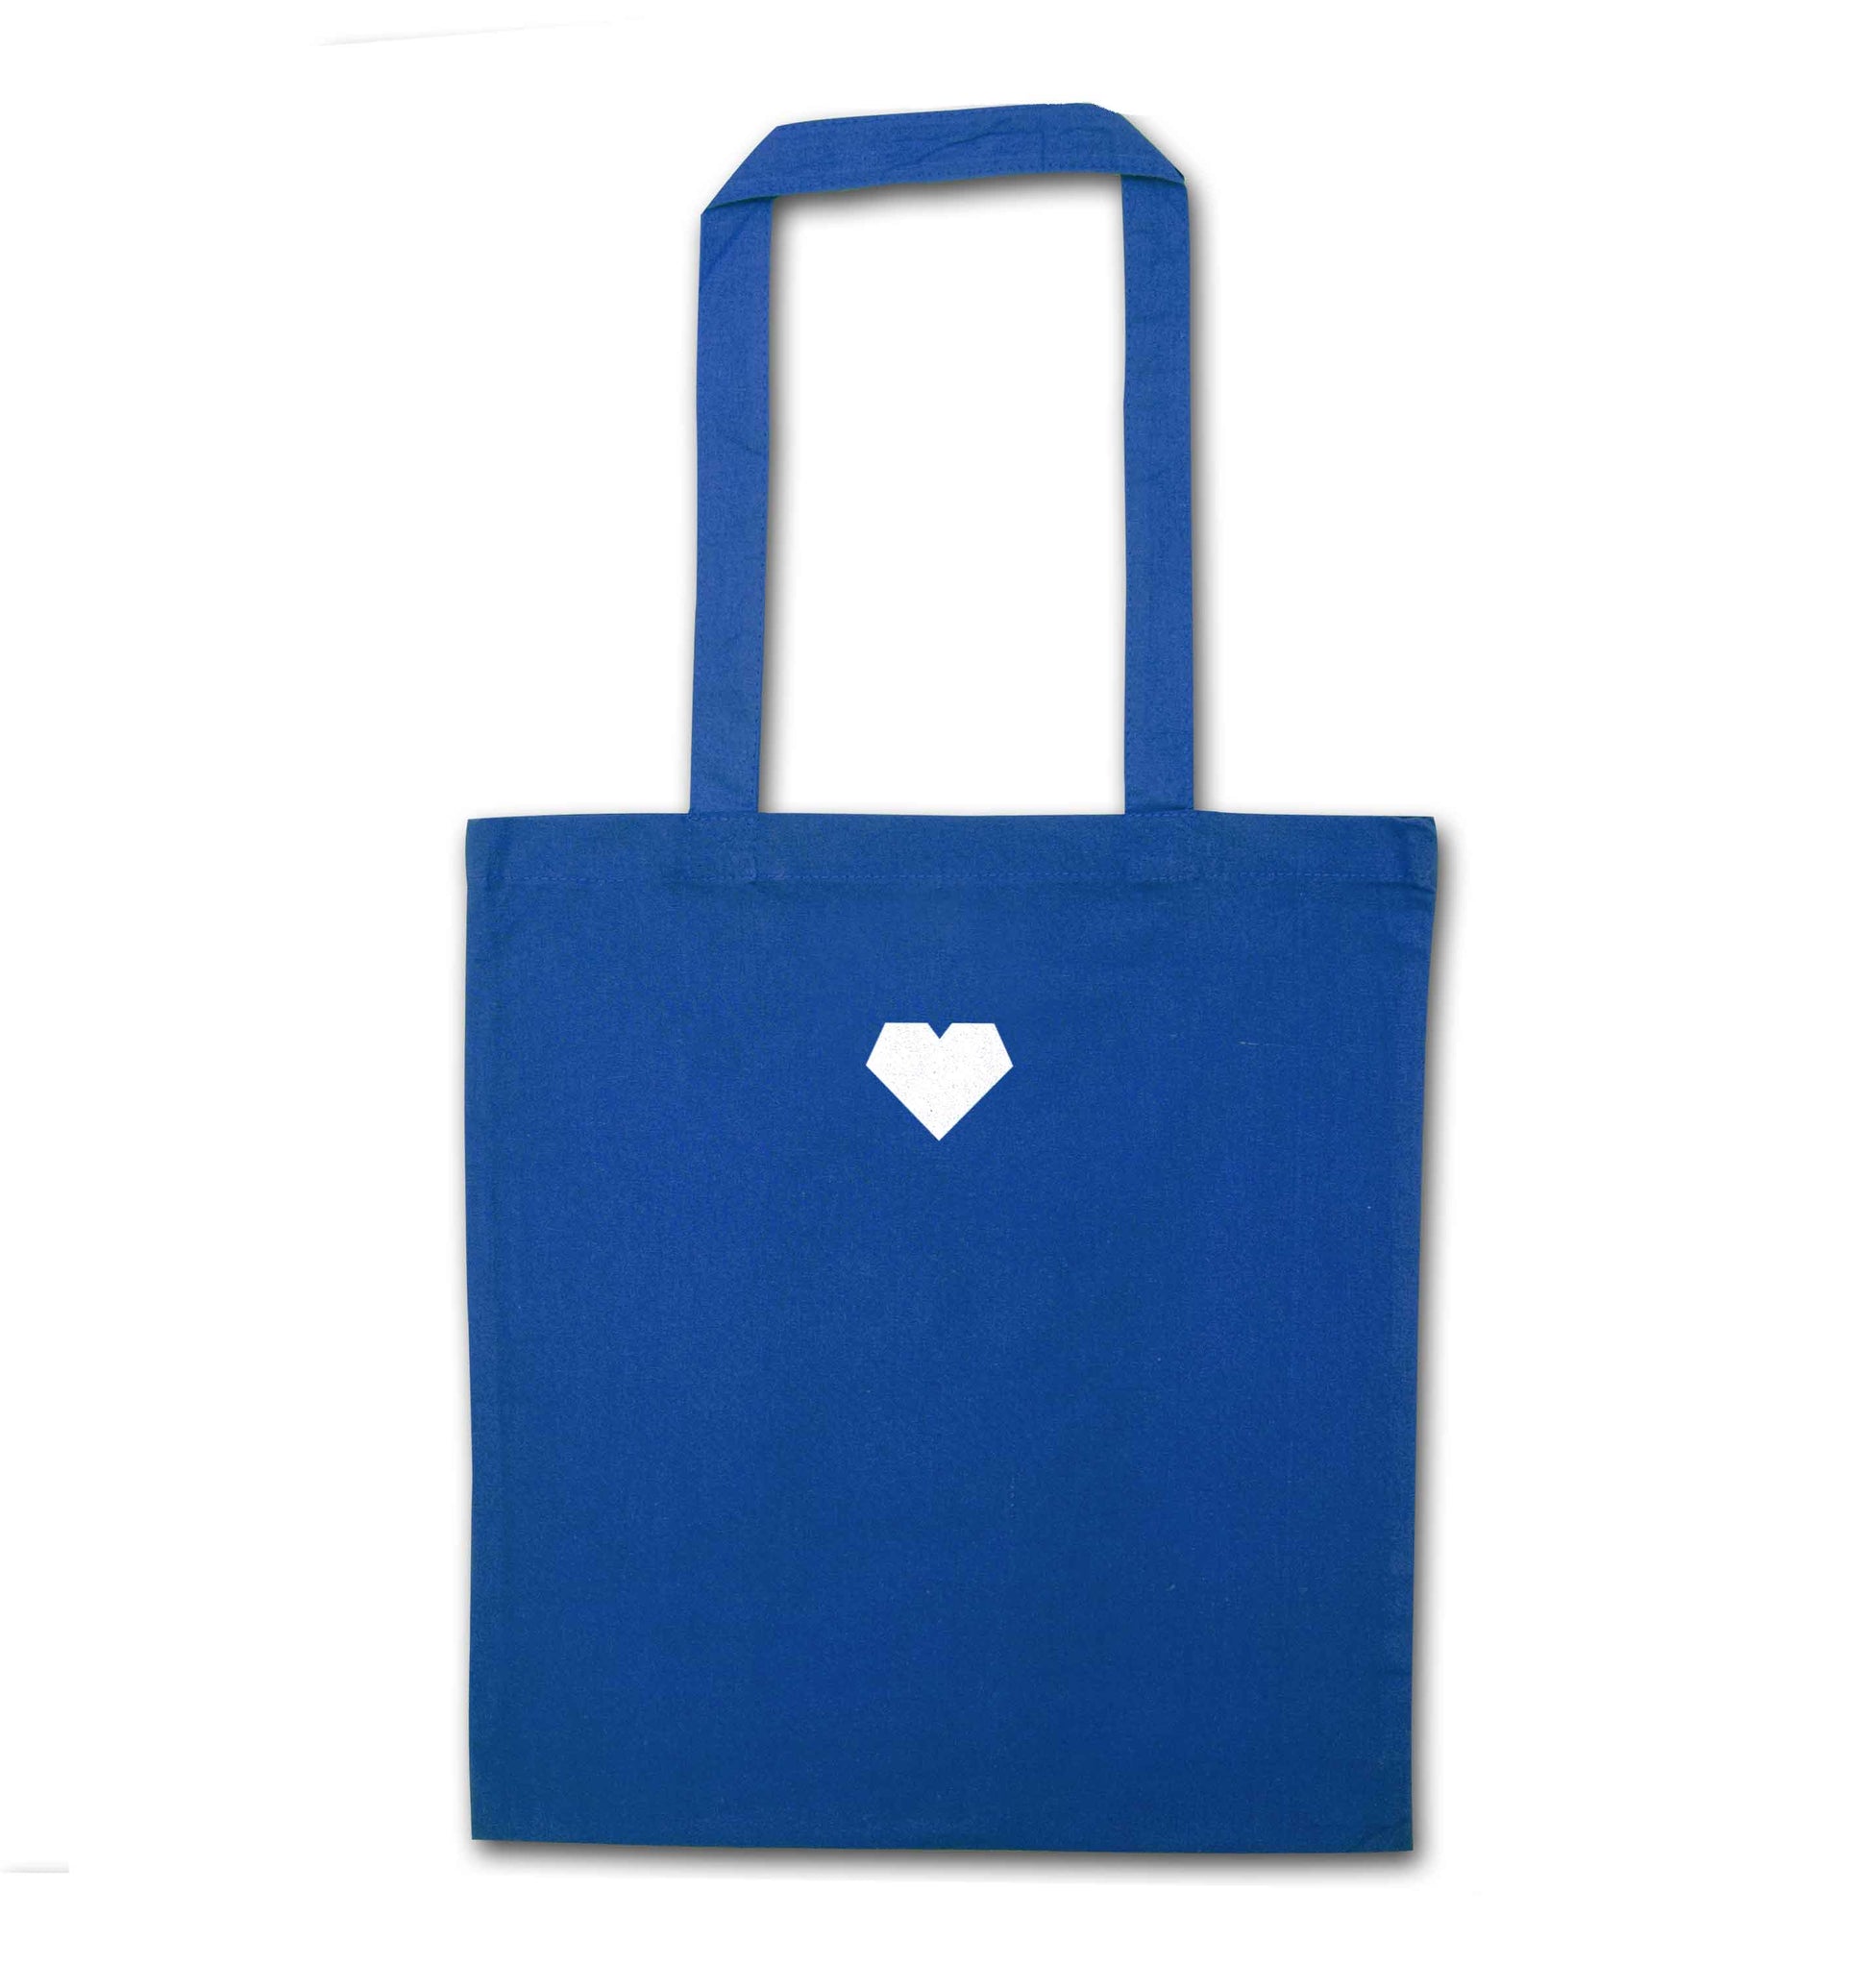 Tiny heart blue tote bag